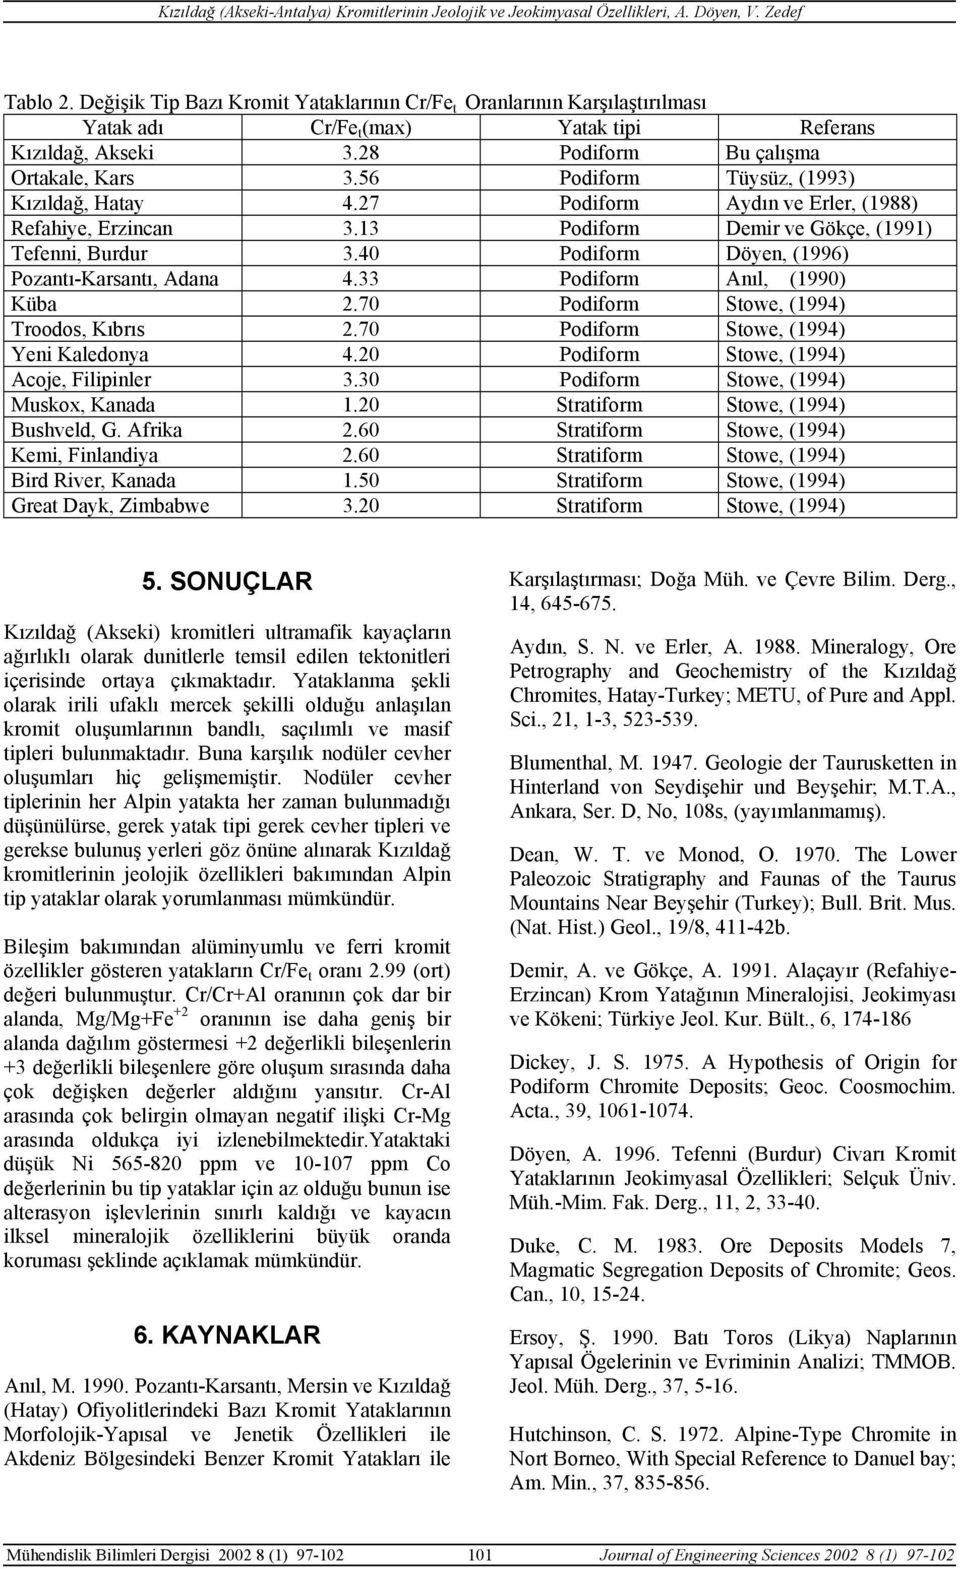 40 Podiform Döyen, (1996) Pozantı-Karsantı, Adana 4.33 Podiform Anıl, (1990) Küba 2.70 Podiform Stowe, (1994) Troodos, Kıbrıs 2.70 Podiform Stowe, (1994) Yeni Kaledonya 4.